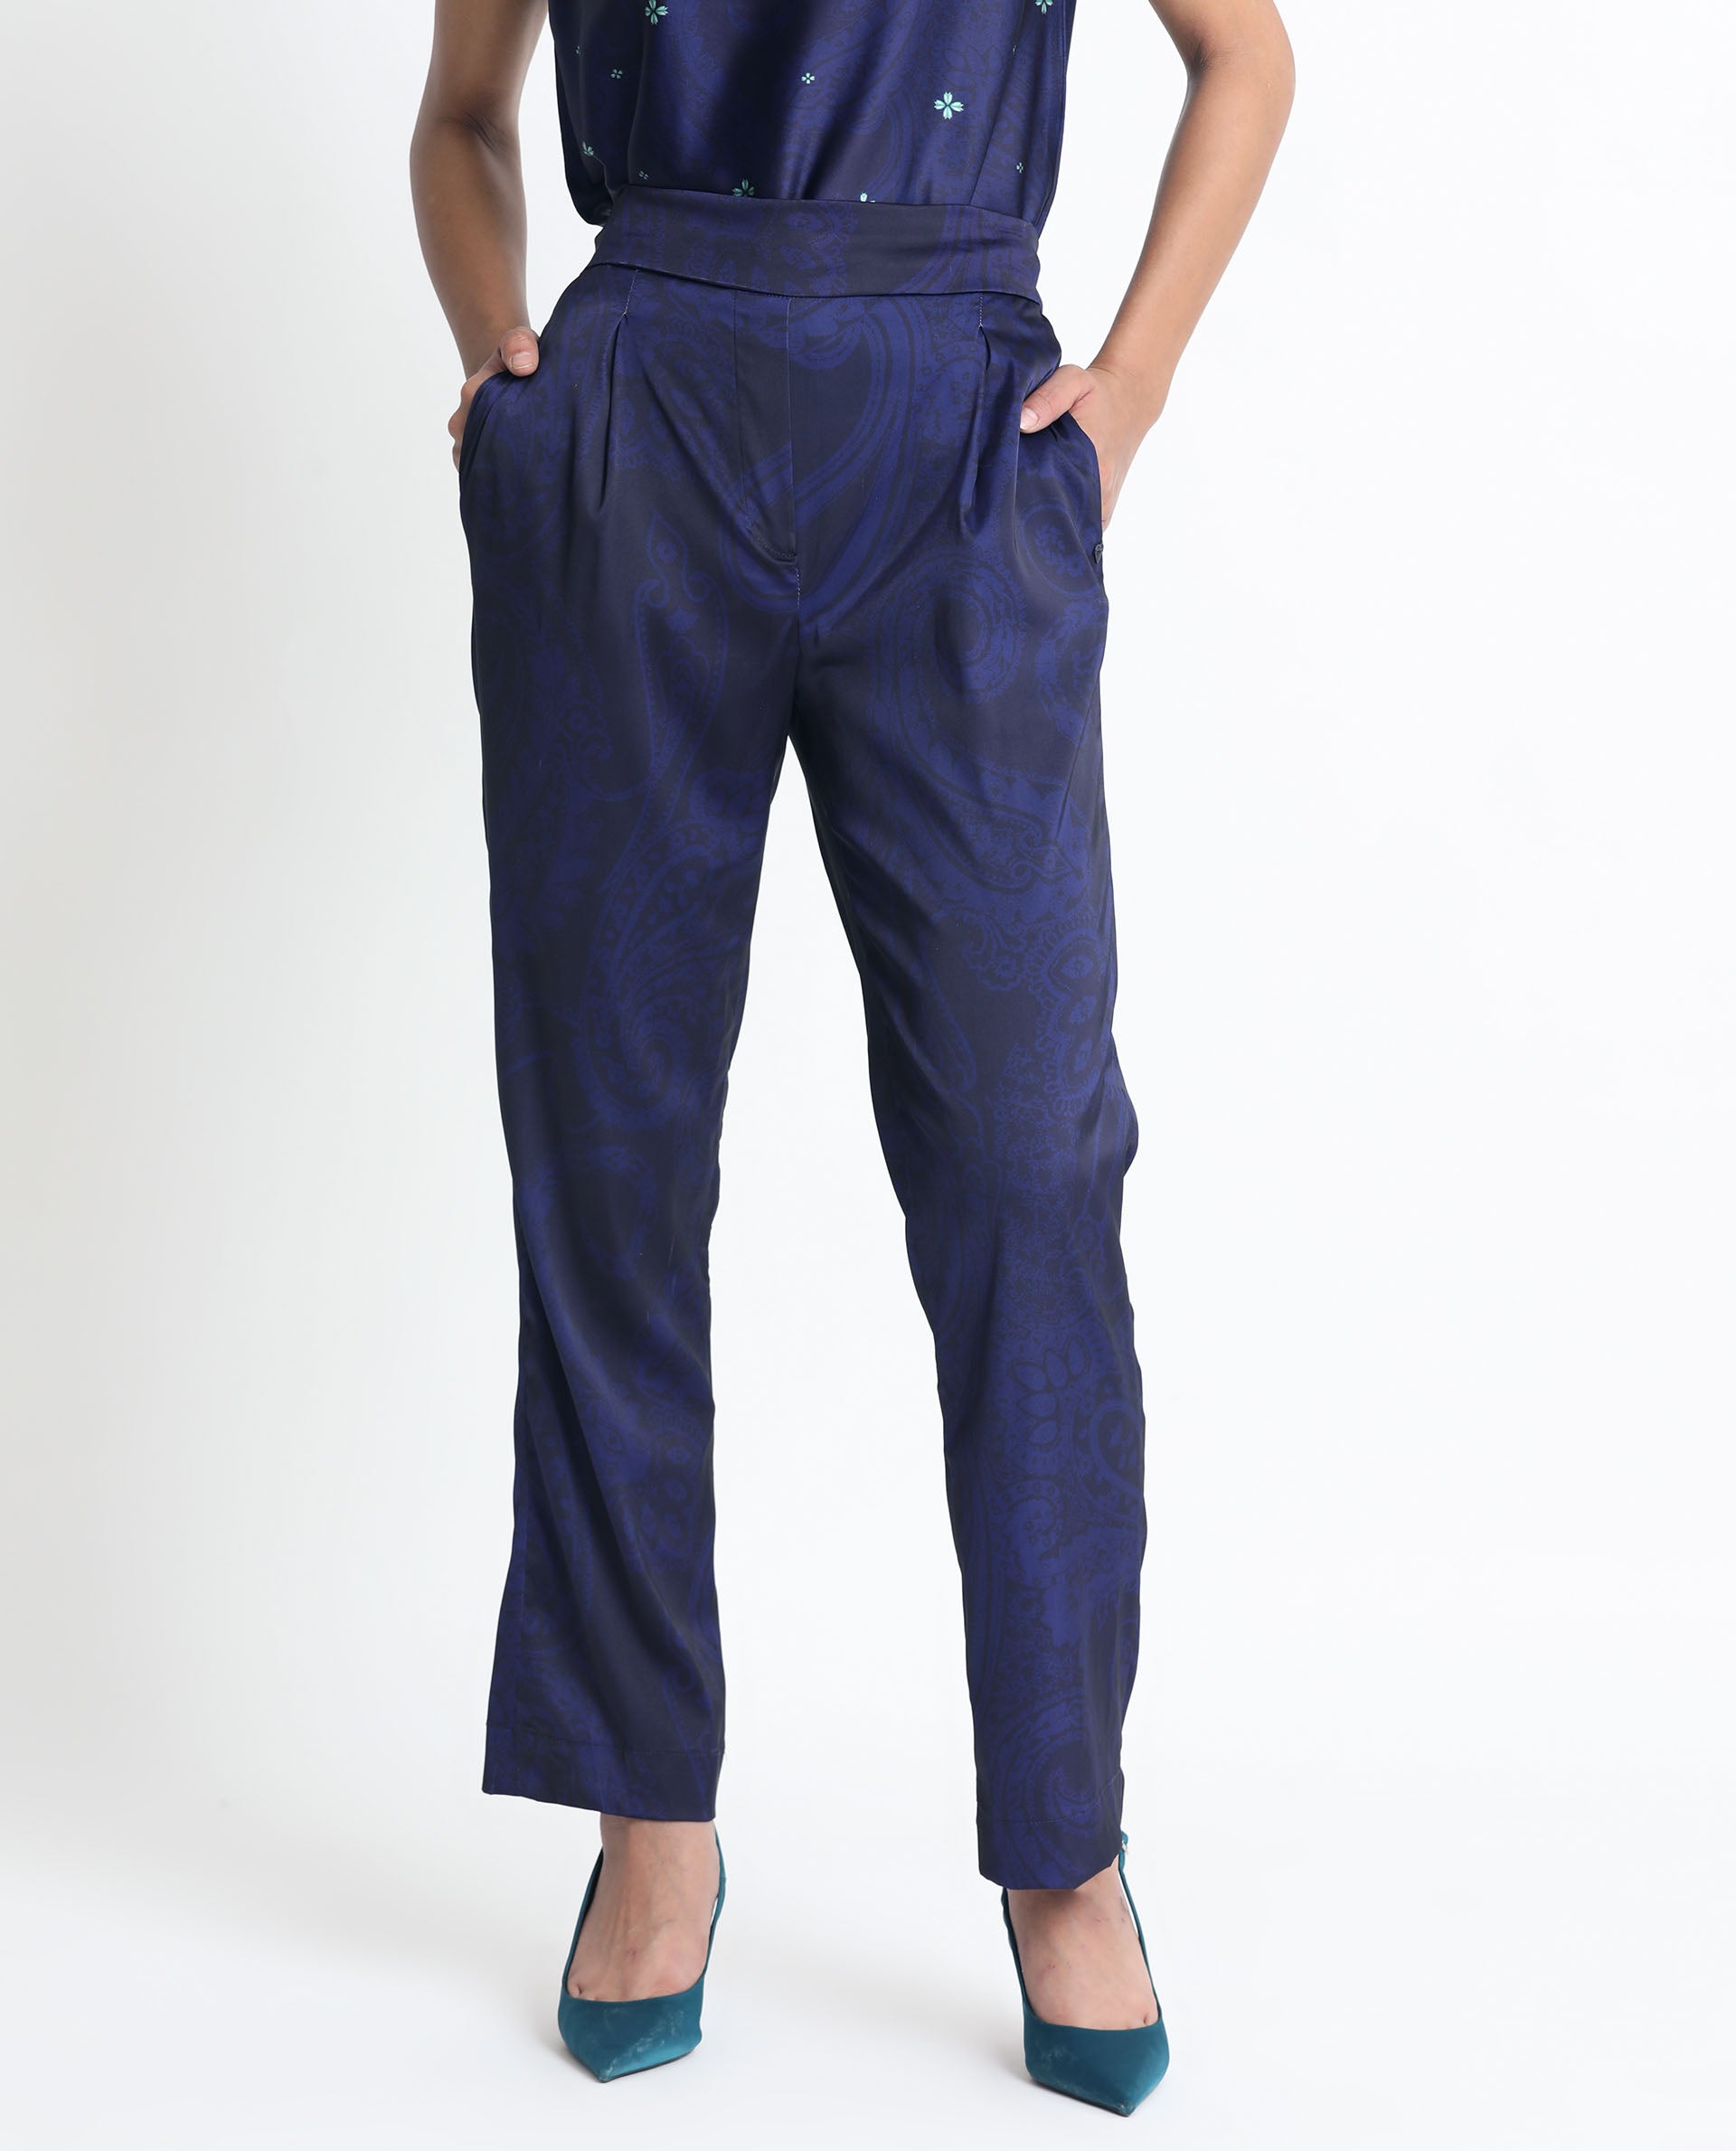 Linea Womens Silver Polyester Trousers Size 18 L26 in Regular Zip | eBay